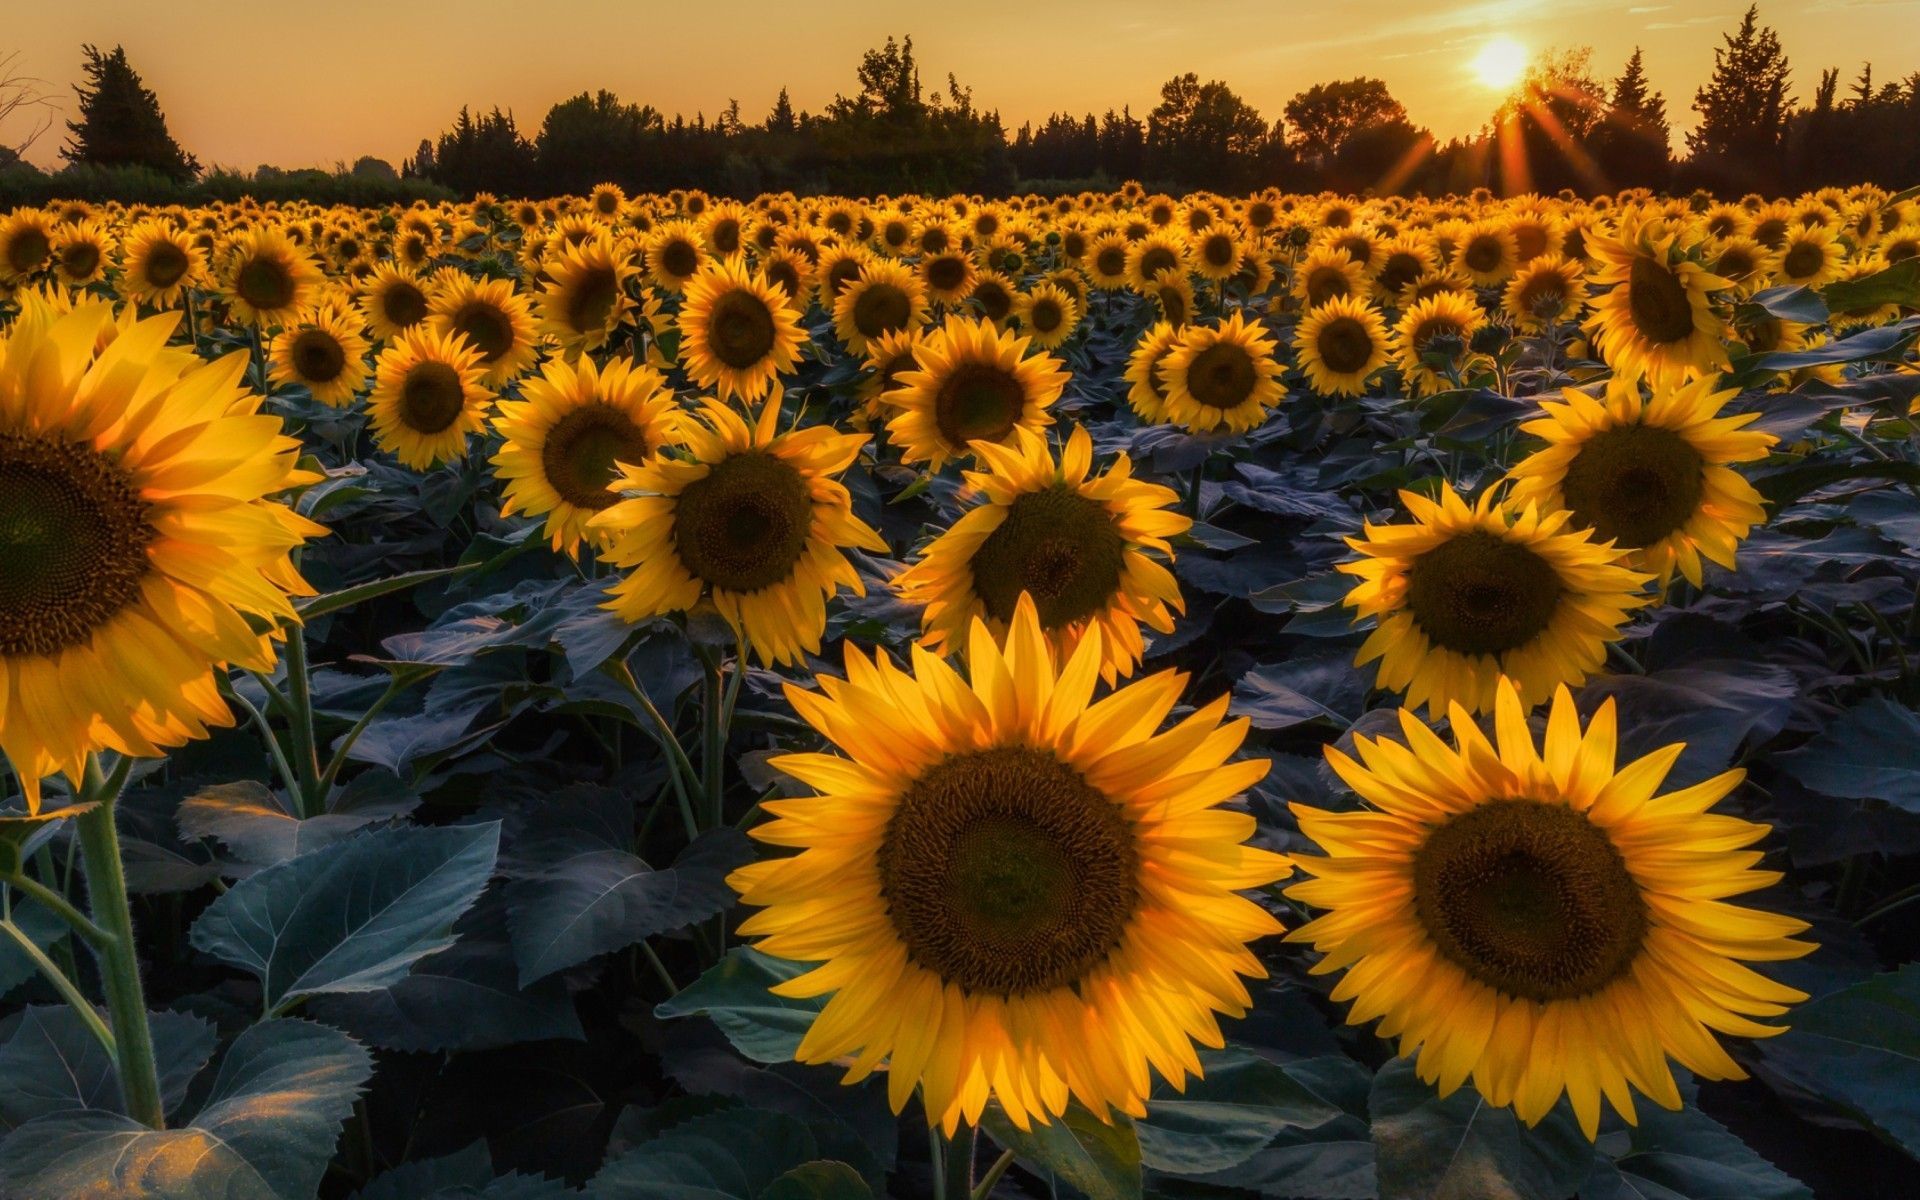 A field of sunflowers in the evening - Sunflower, sun